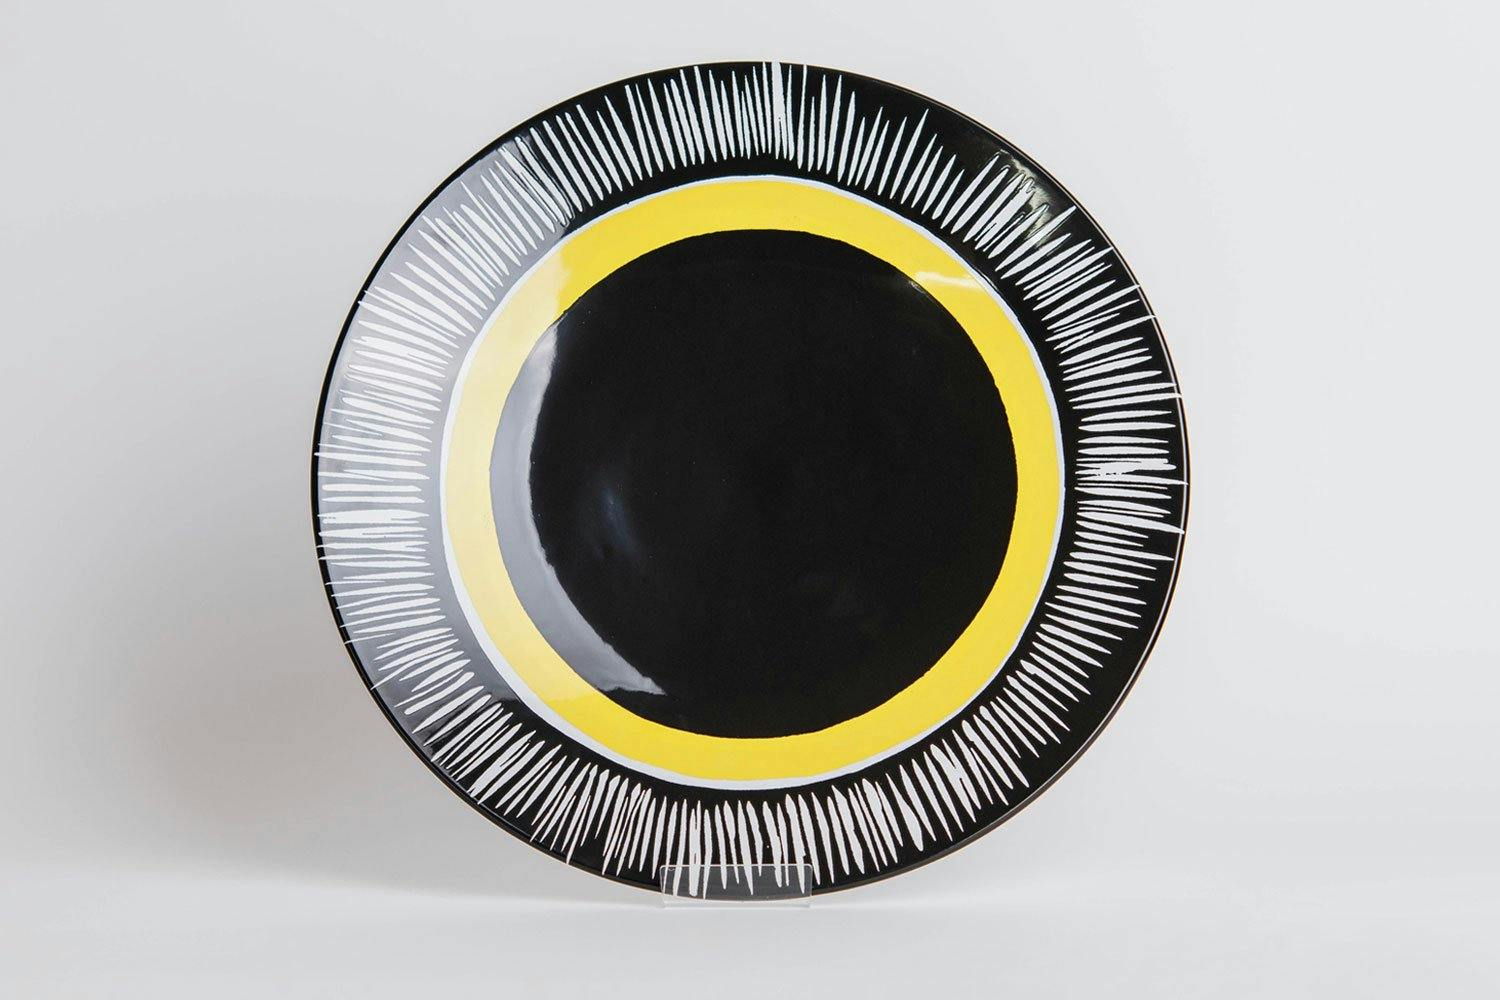 Trewellard Suns, No 4, 1990 - Limited Edition Ceramic Platter